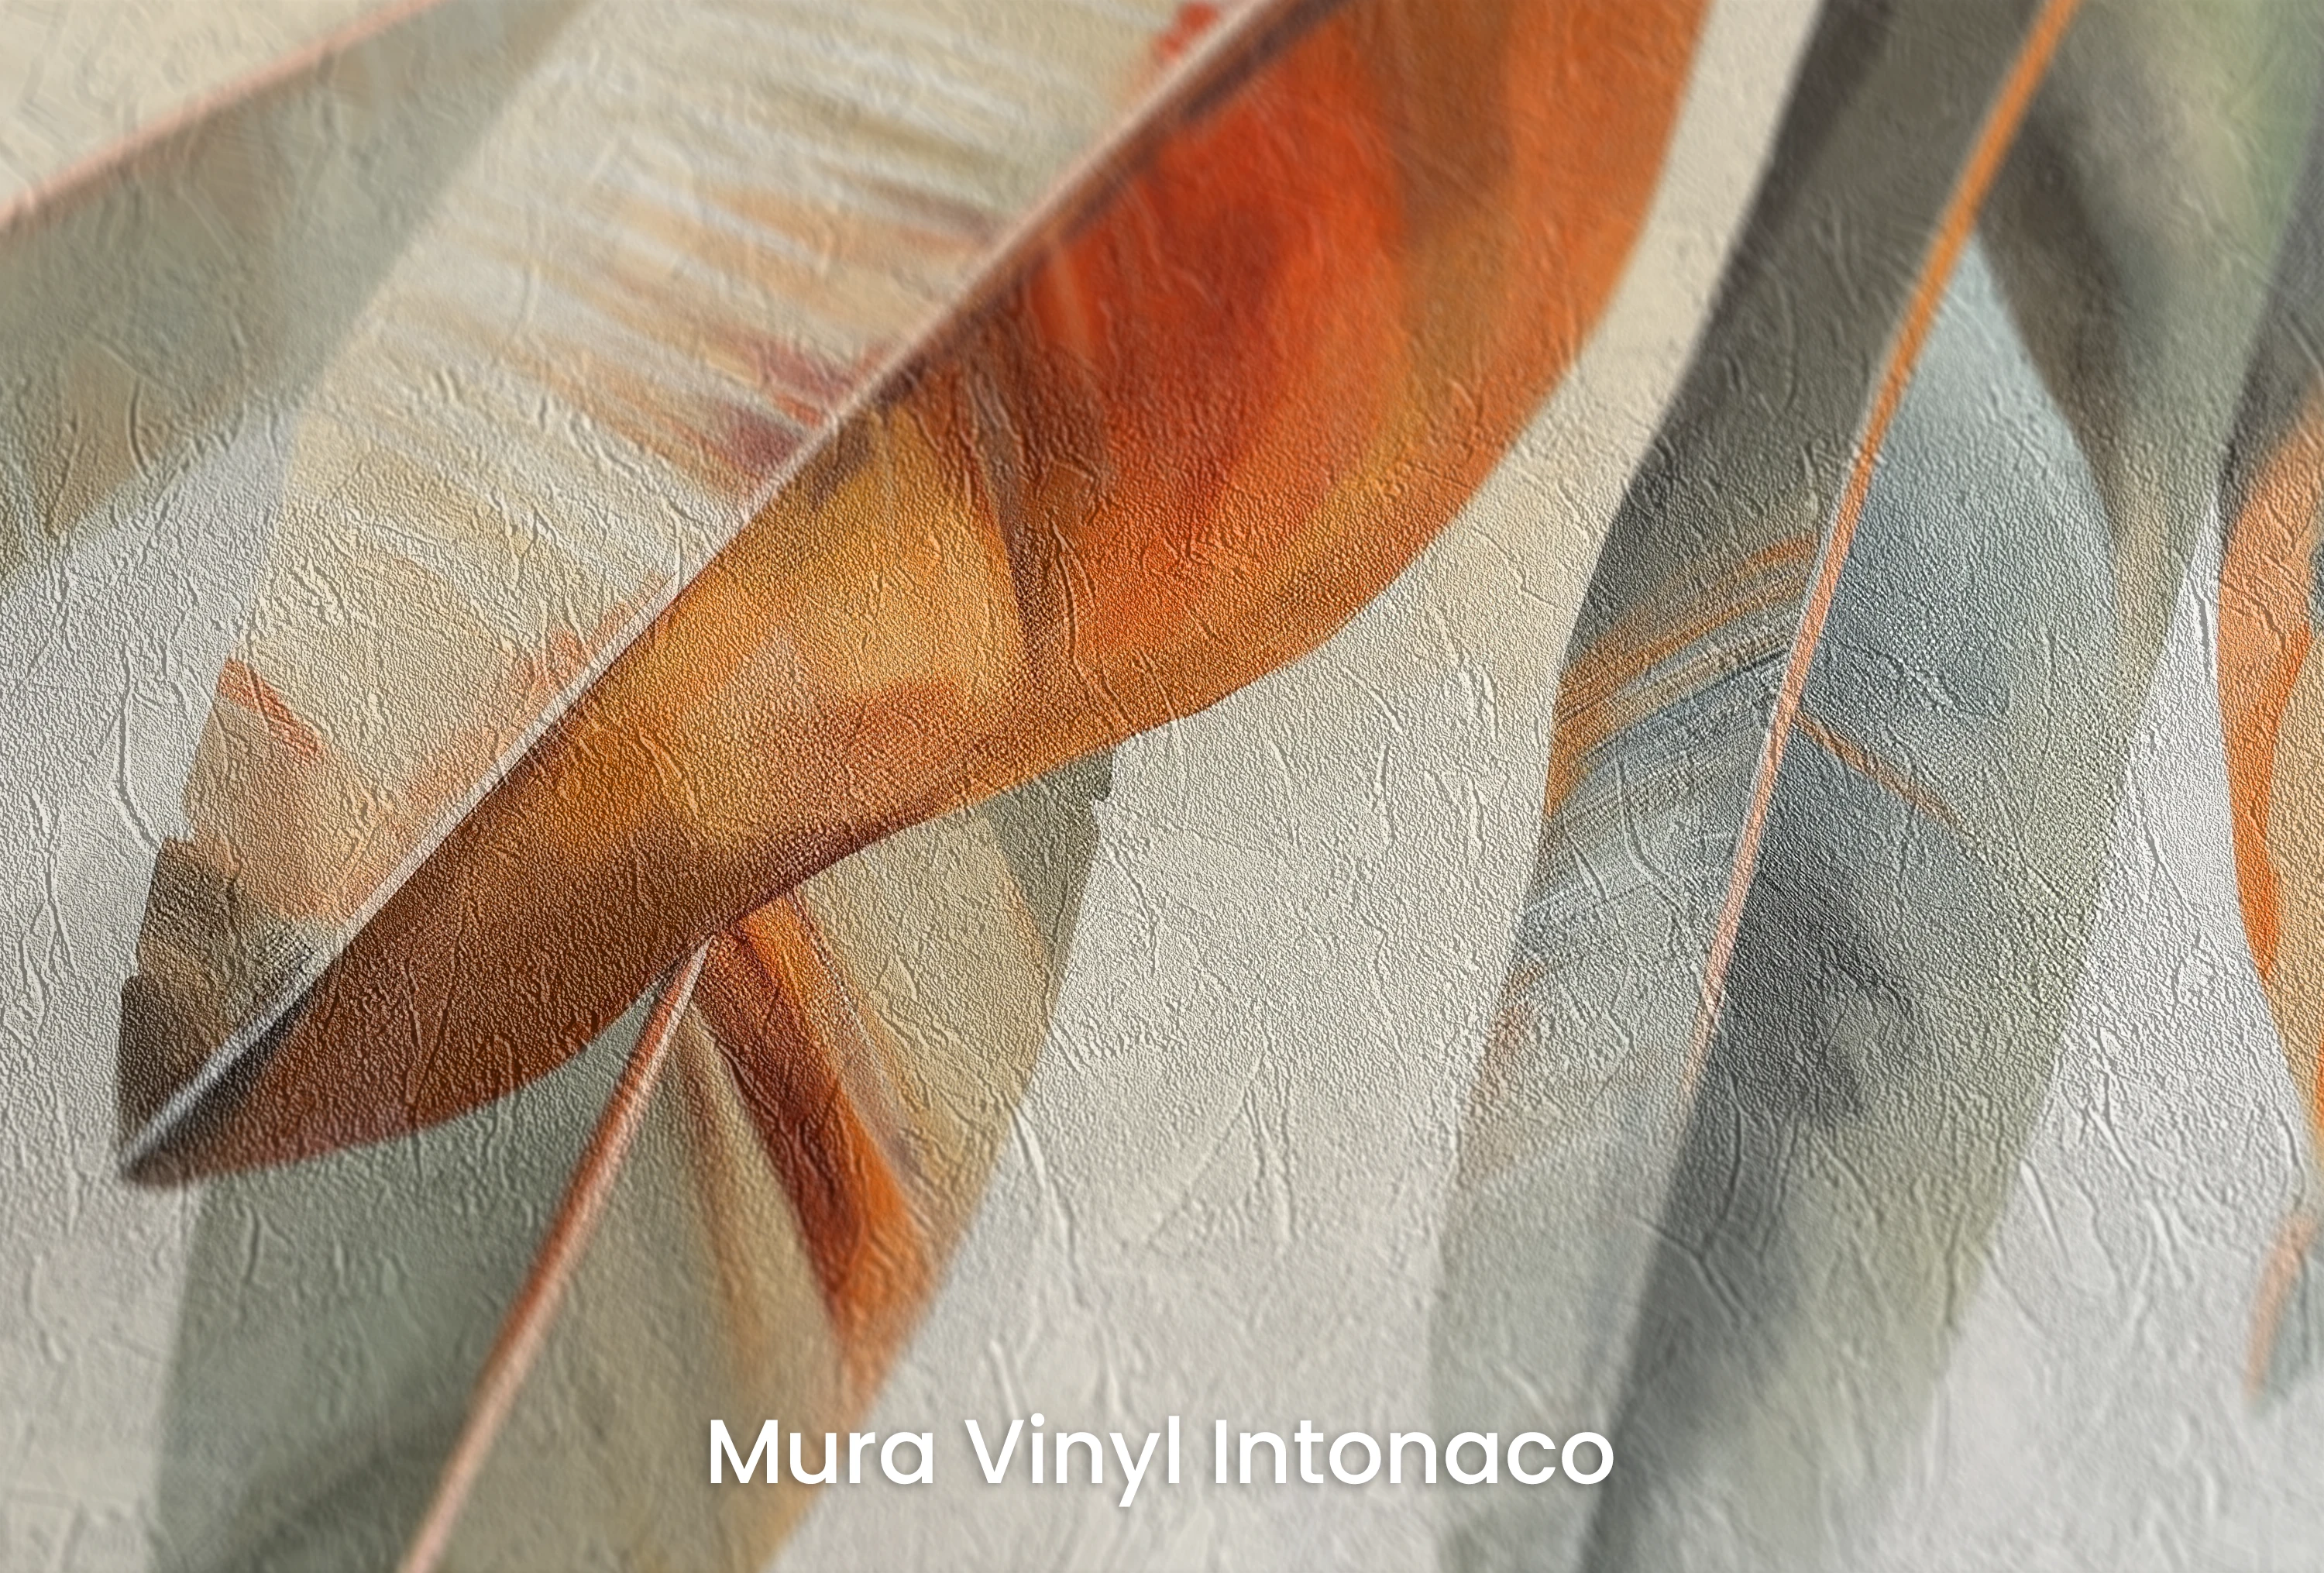 Fototapetenmuster gedruckt auf „Mura Vinyl Intonaco“-Substrat